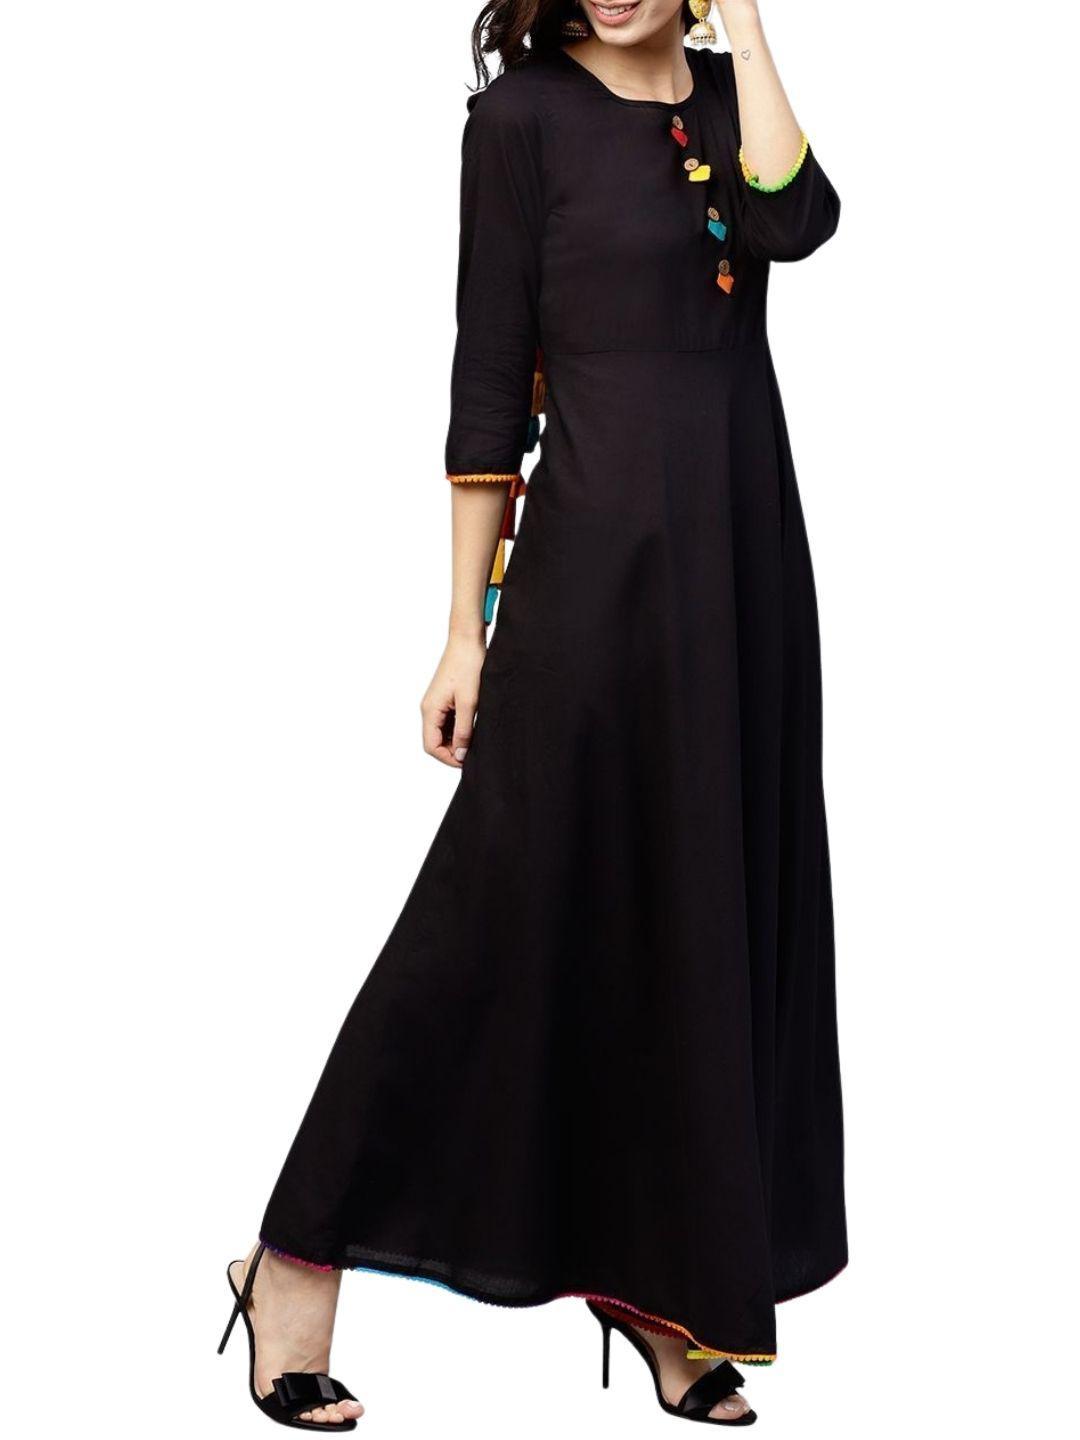 mild walgelijk kubiek Shop Black Maxi Dress for womens in the USA - Free Shipping, Easy Returns  -Fledgling Wings